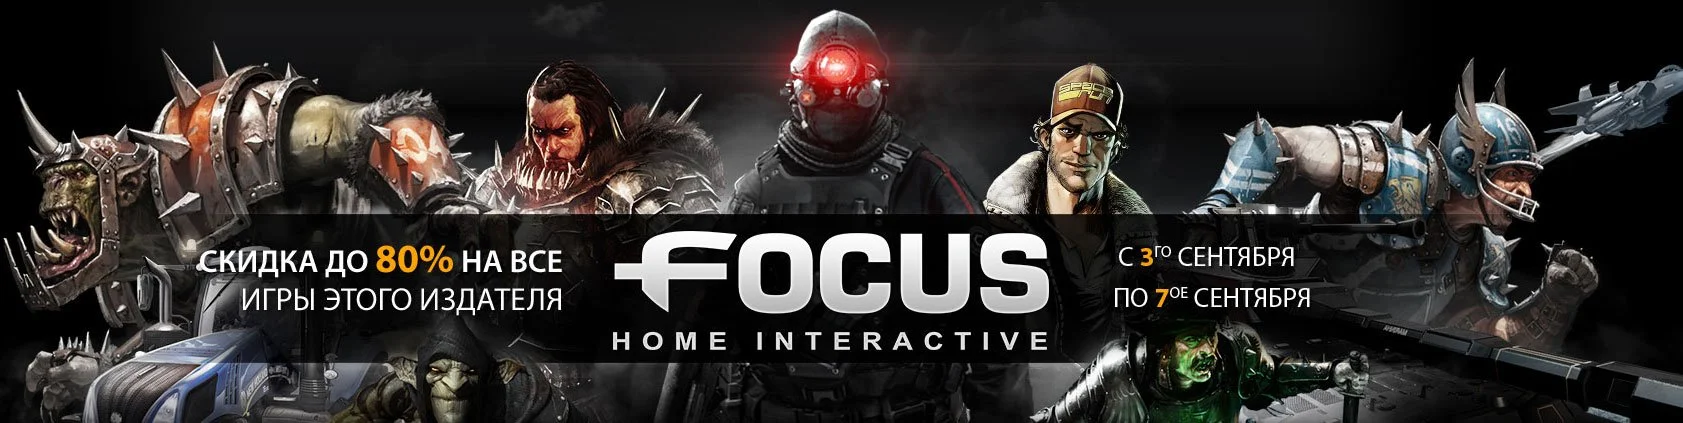 Steam-распродажа от Focus Home Interactive - фото 1